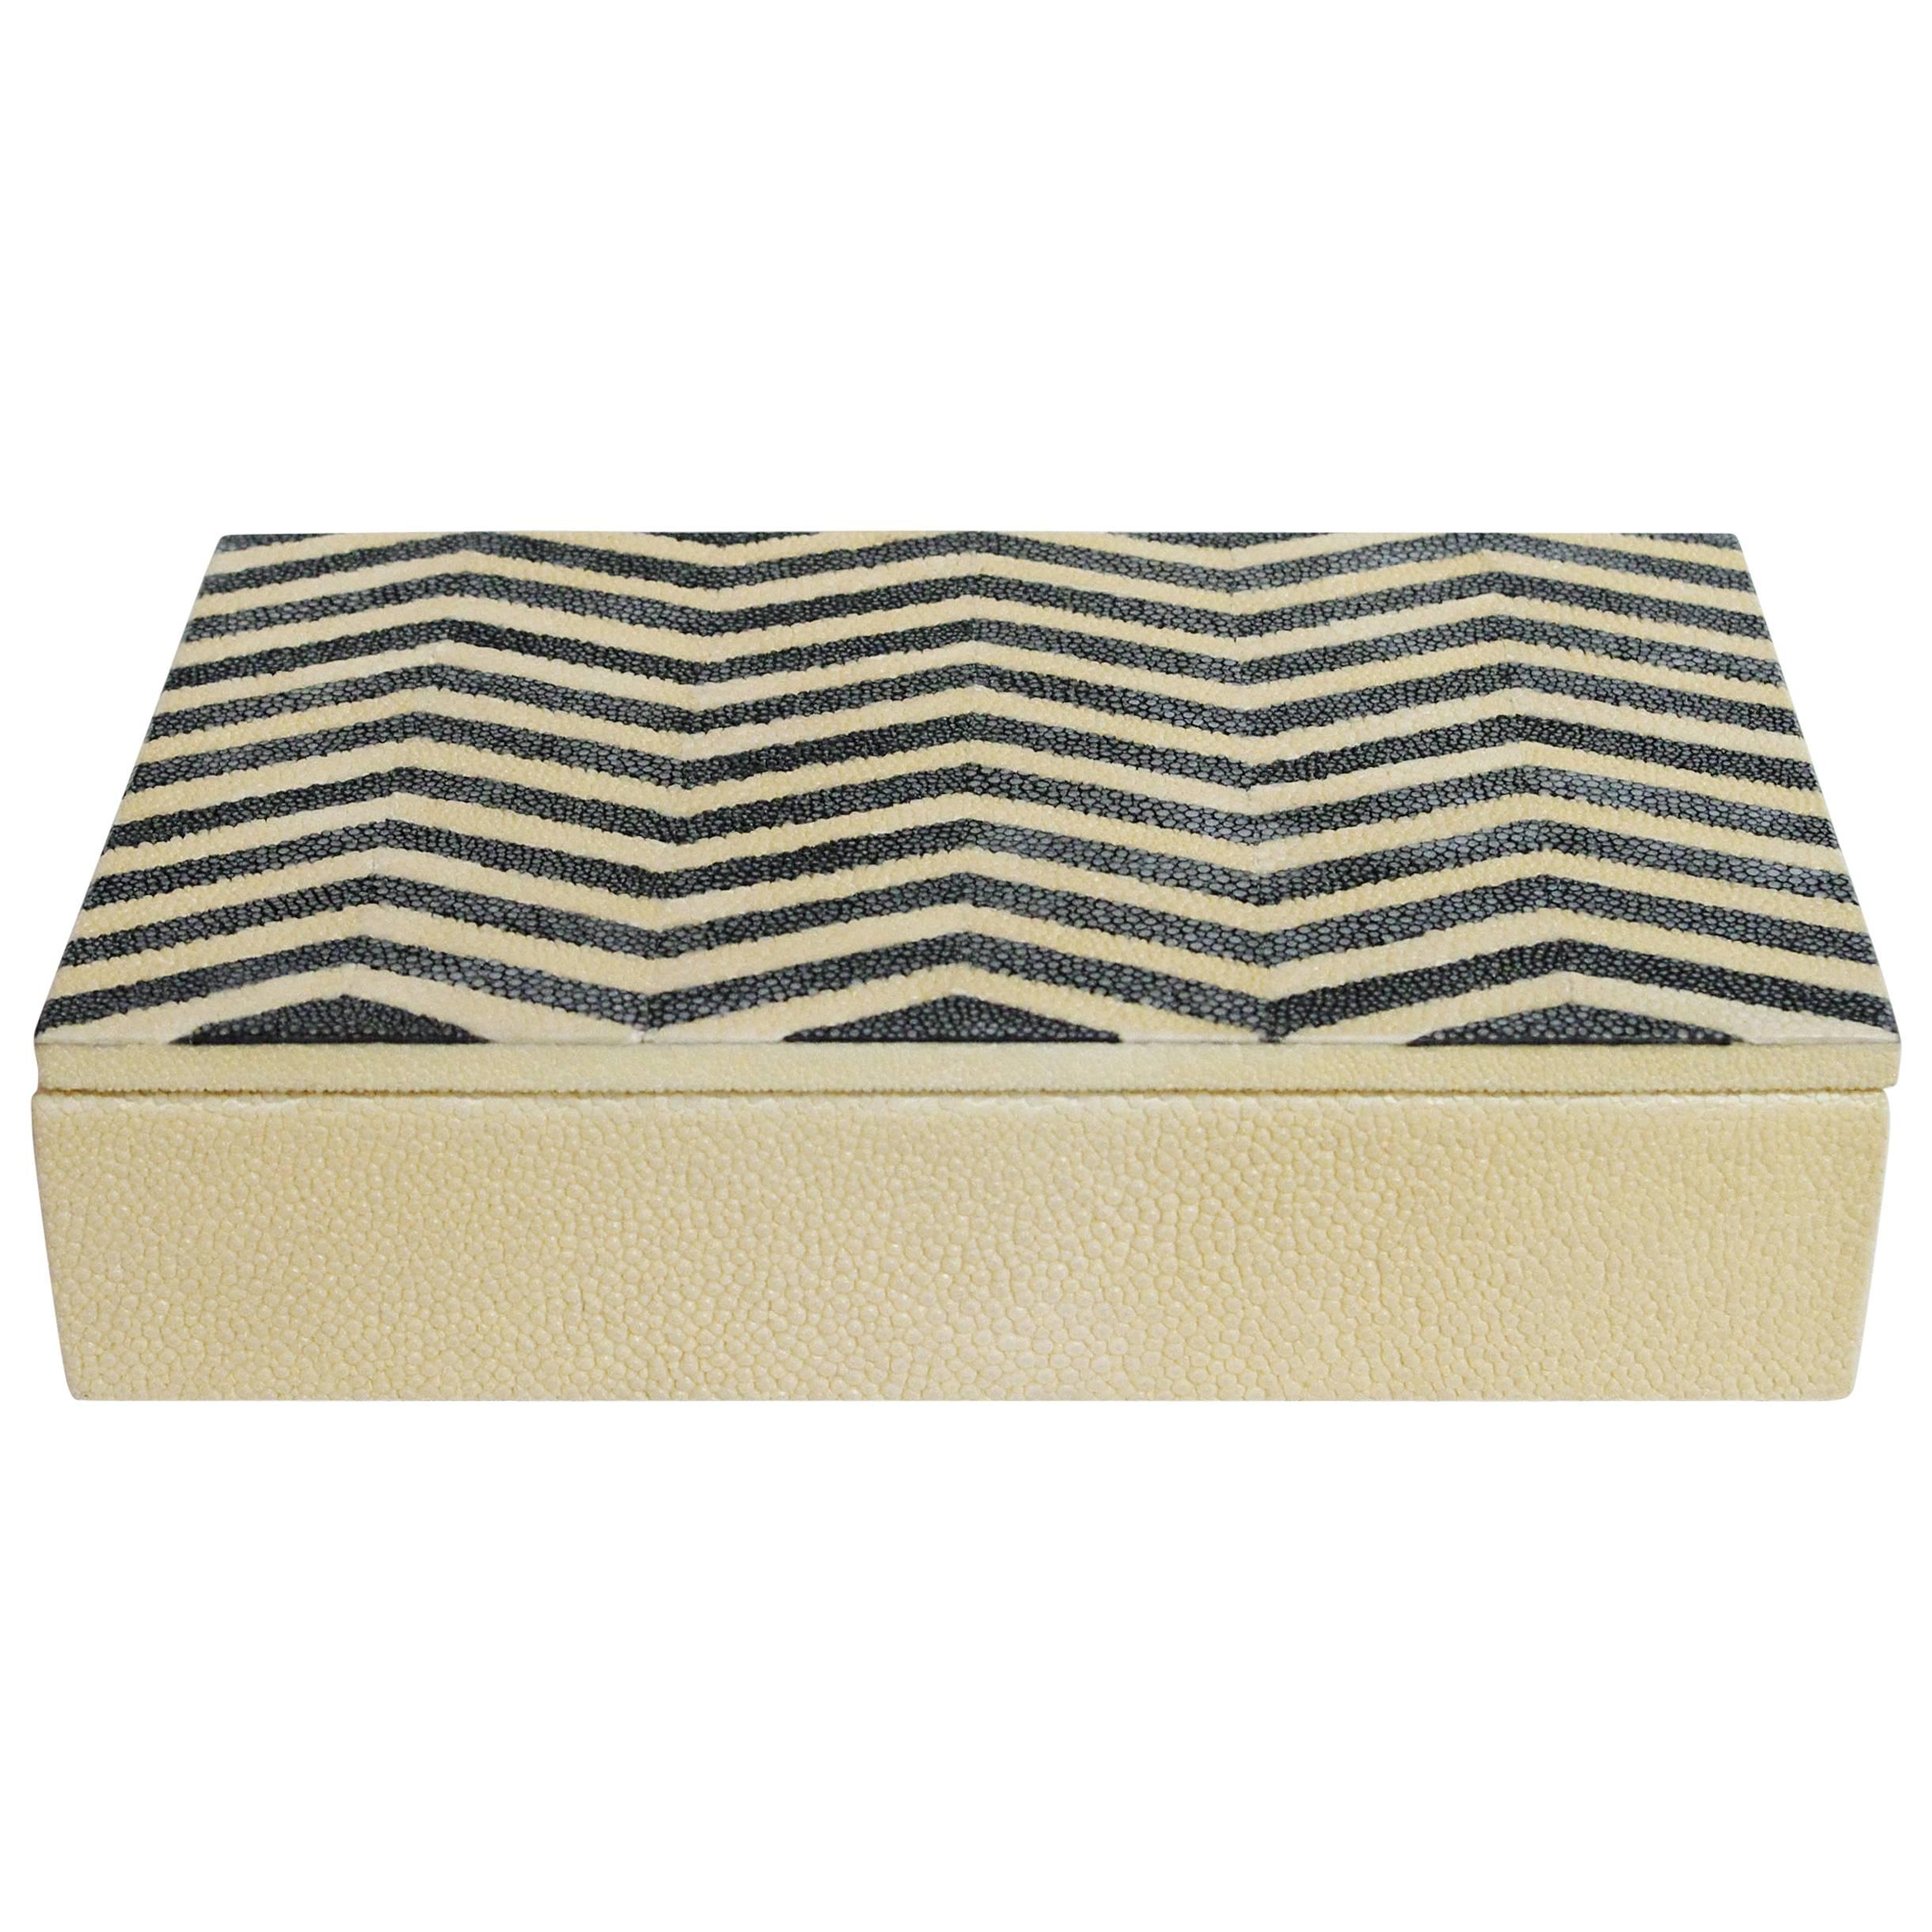 Ivory and Black Shagreen Box by Fabio Ltd